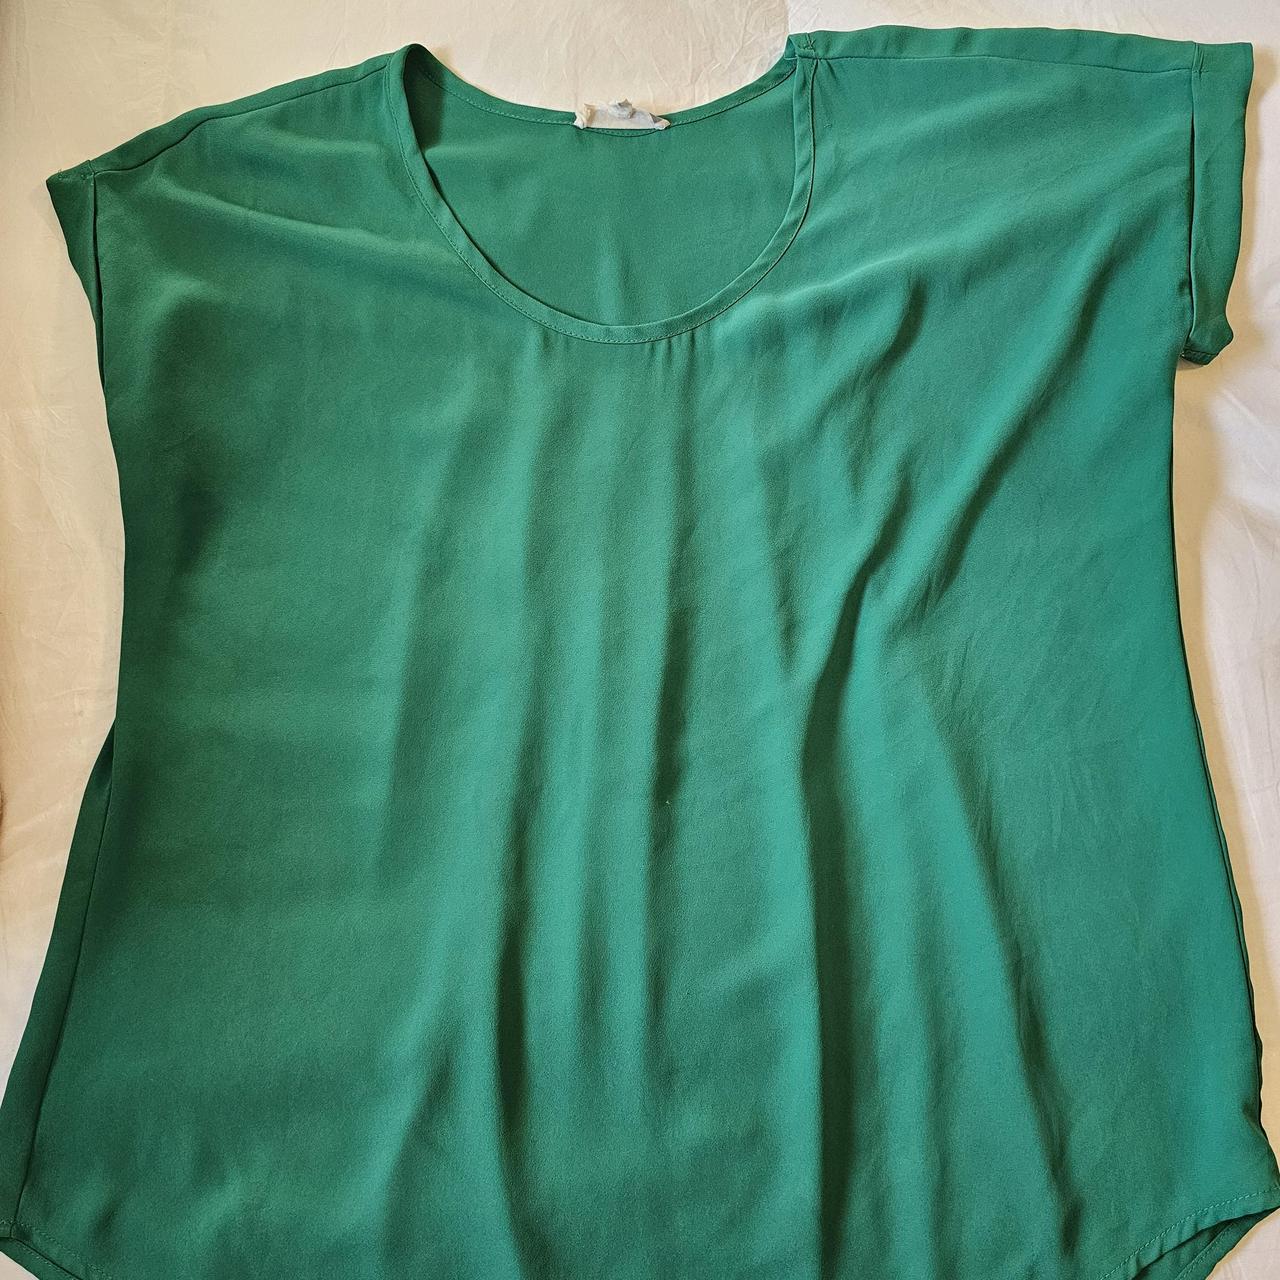 Emerald Green Shirt/Blouse. Cuffed Sleeves. Pleated... - Depop